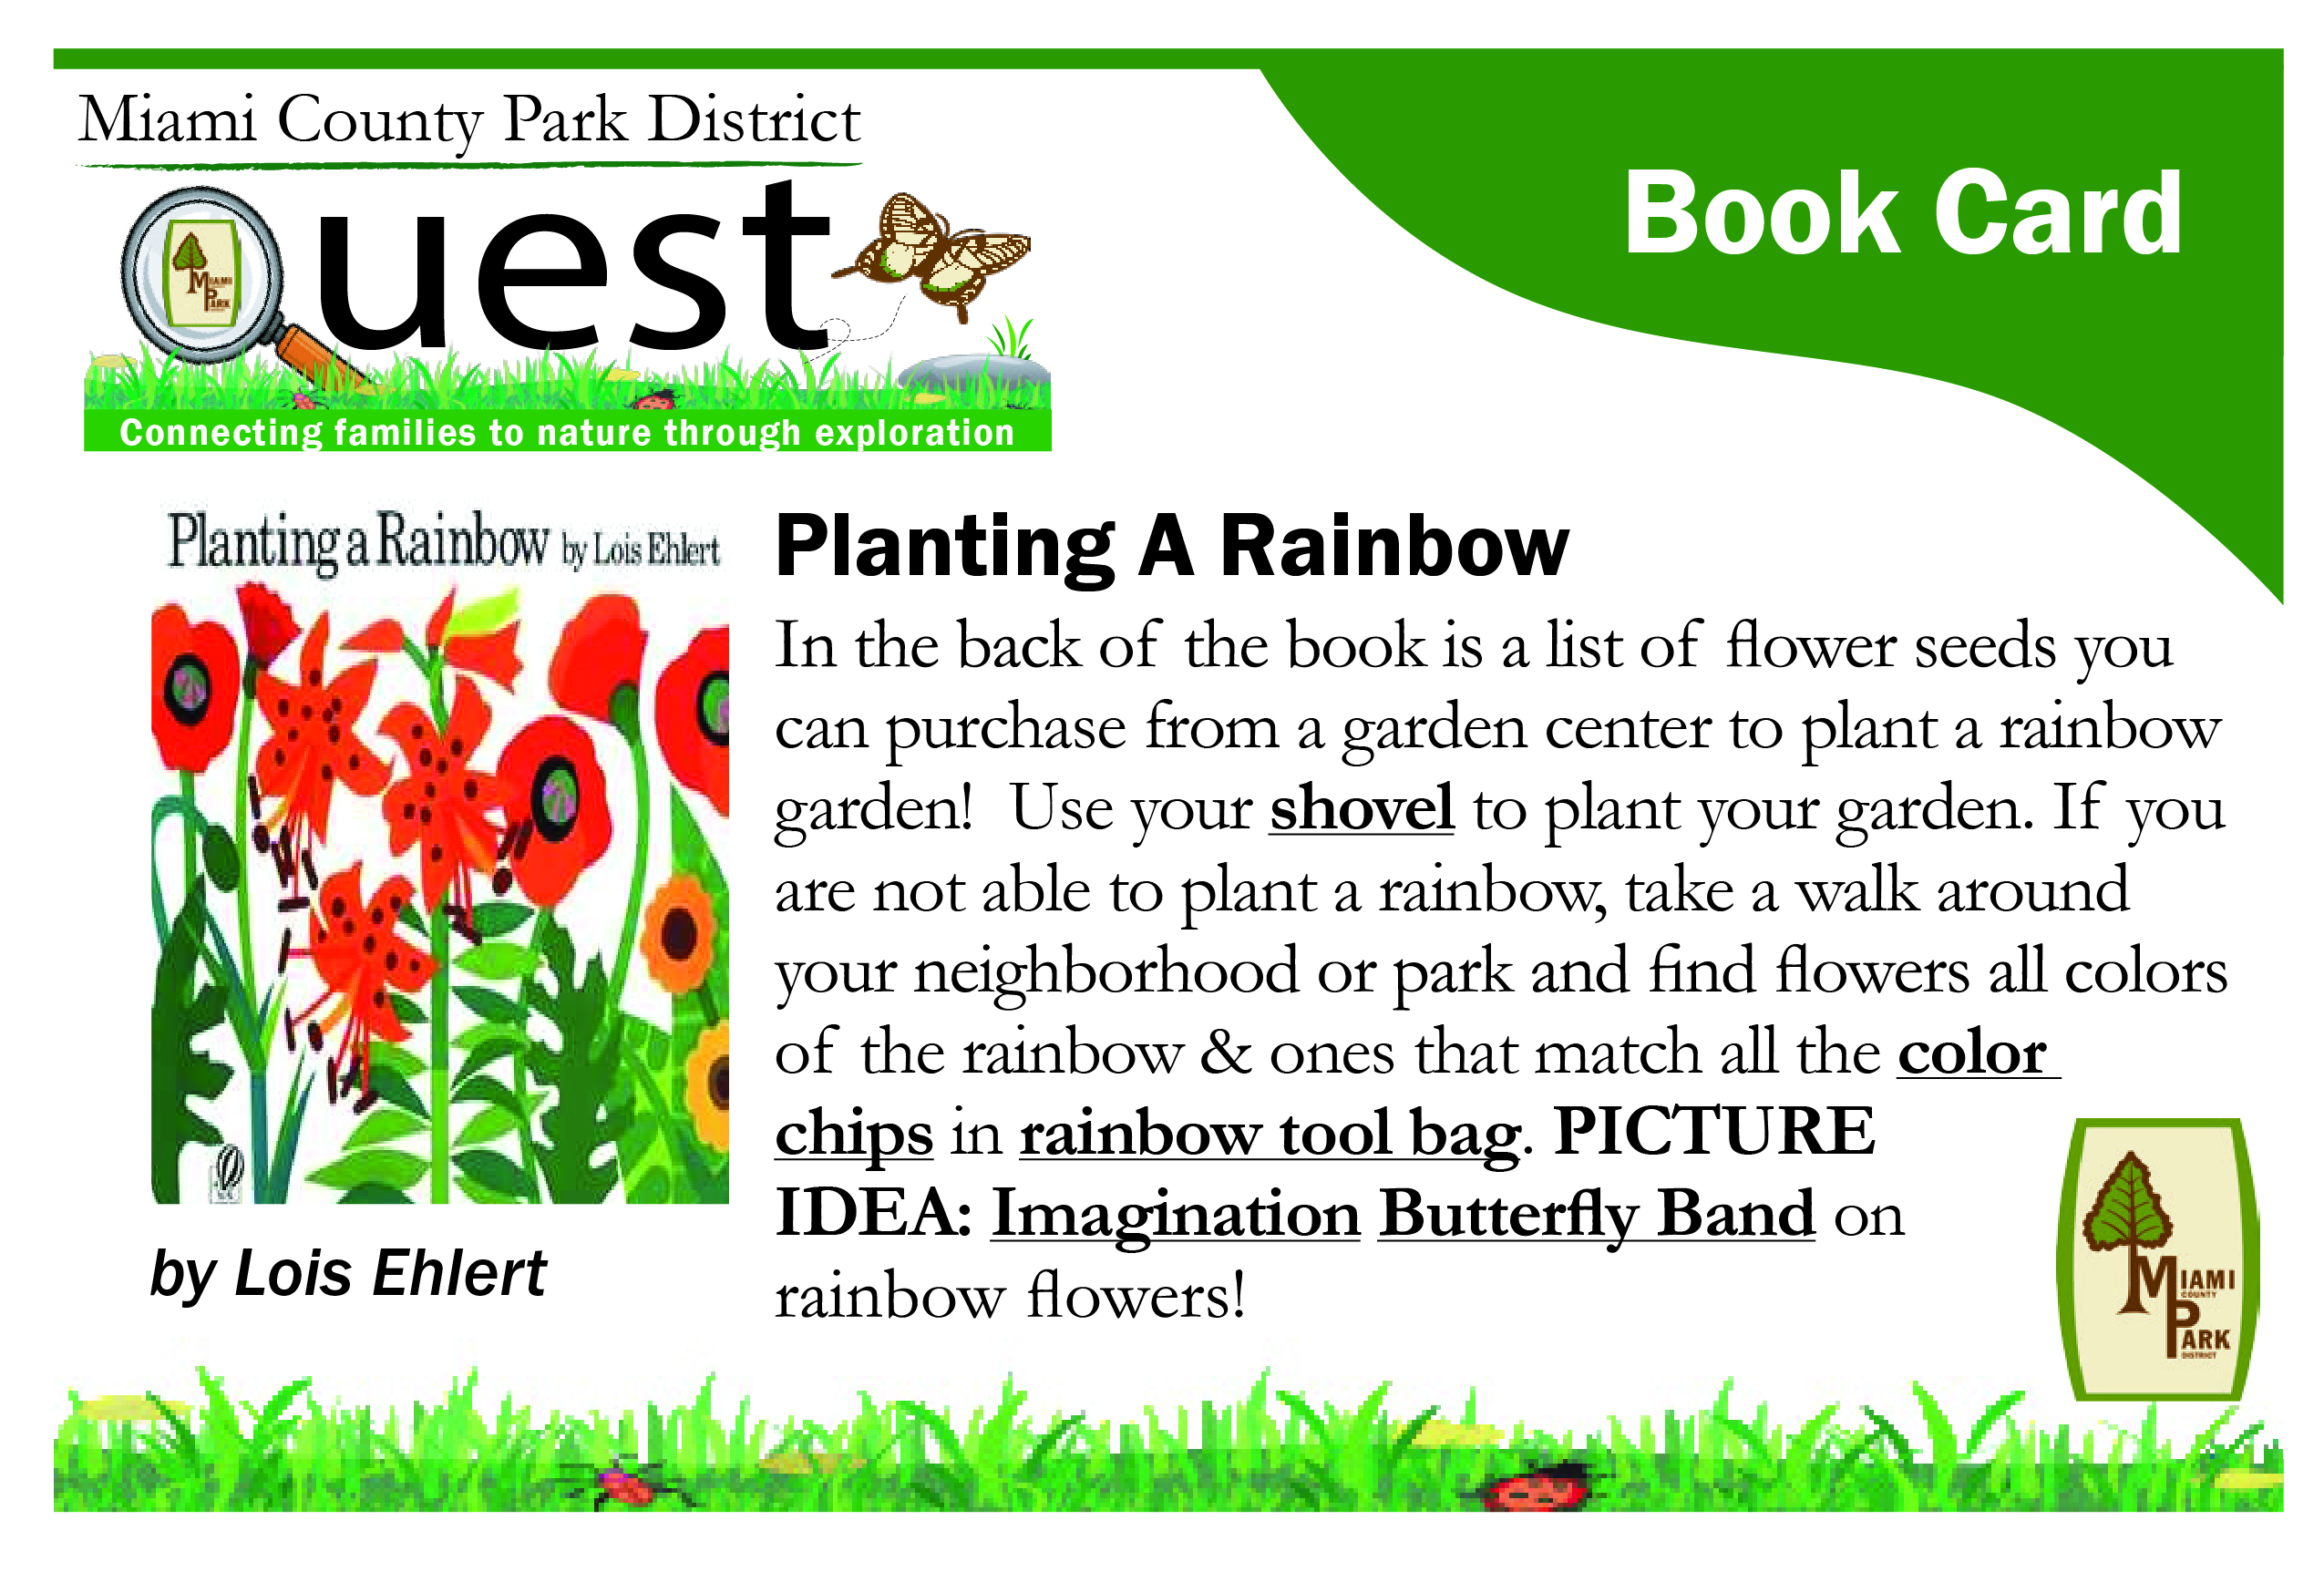 Planting a rainbow book card